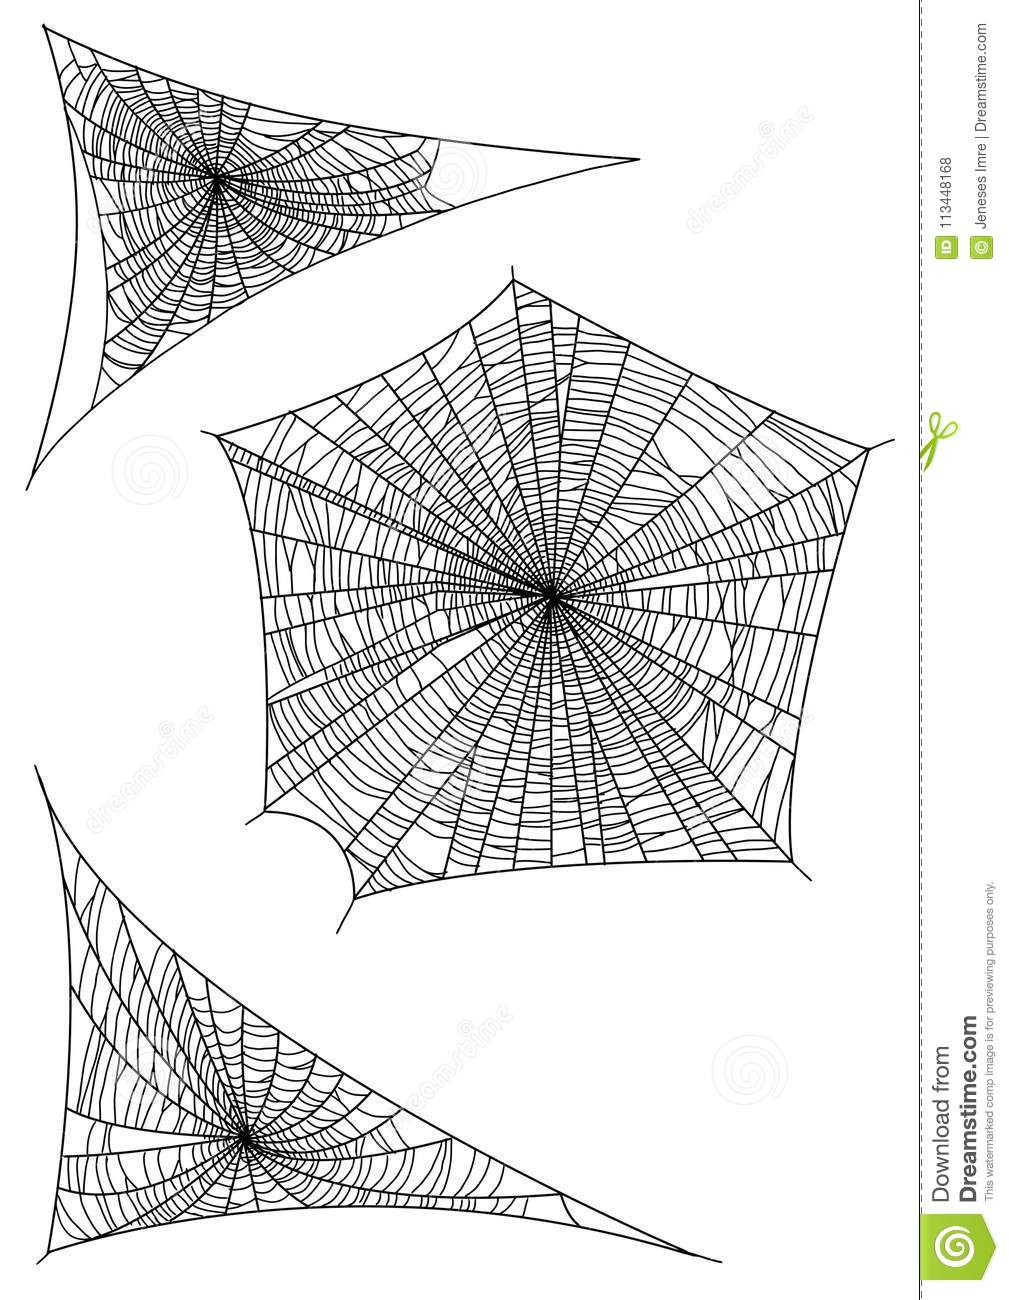 Illustration De Toile D&amp;#039;araignée, Dessin, Gravure, Encre intérieur Toile D Araignée Dessin 